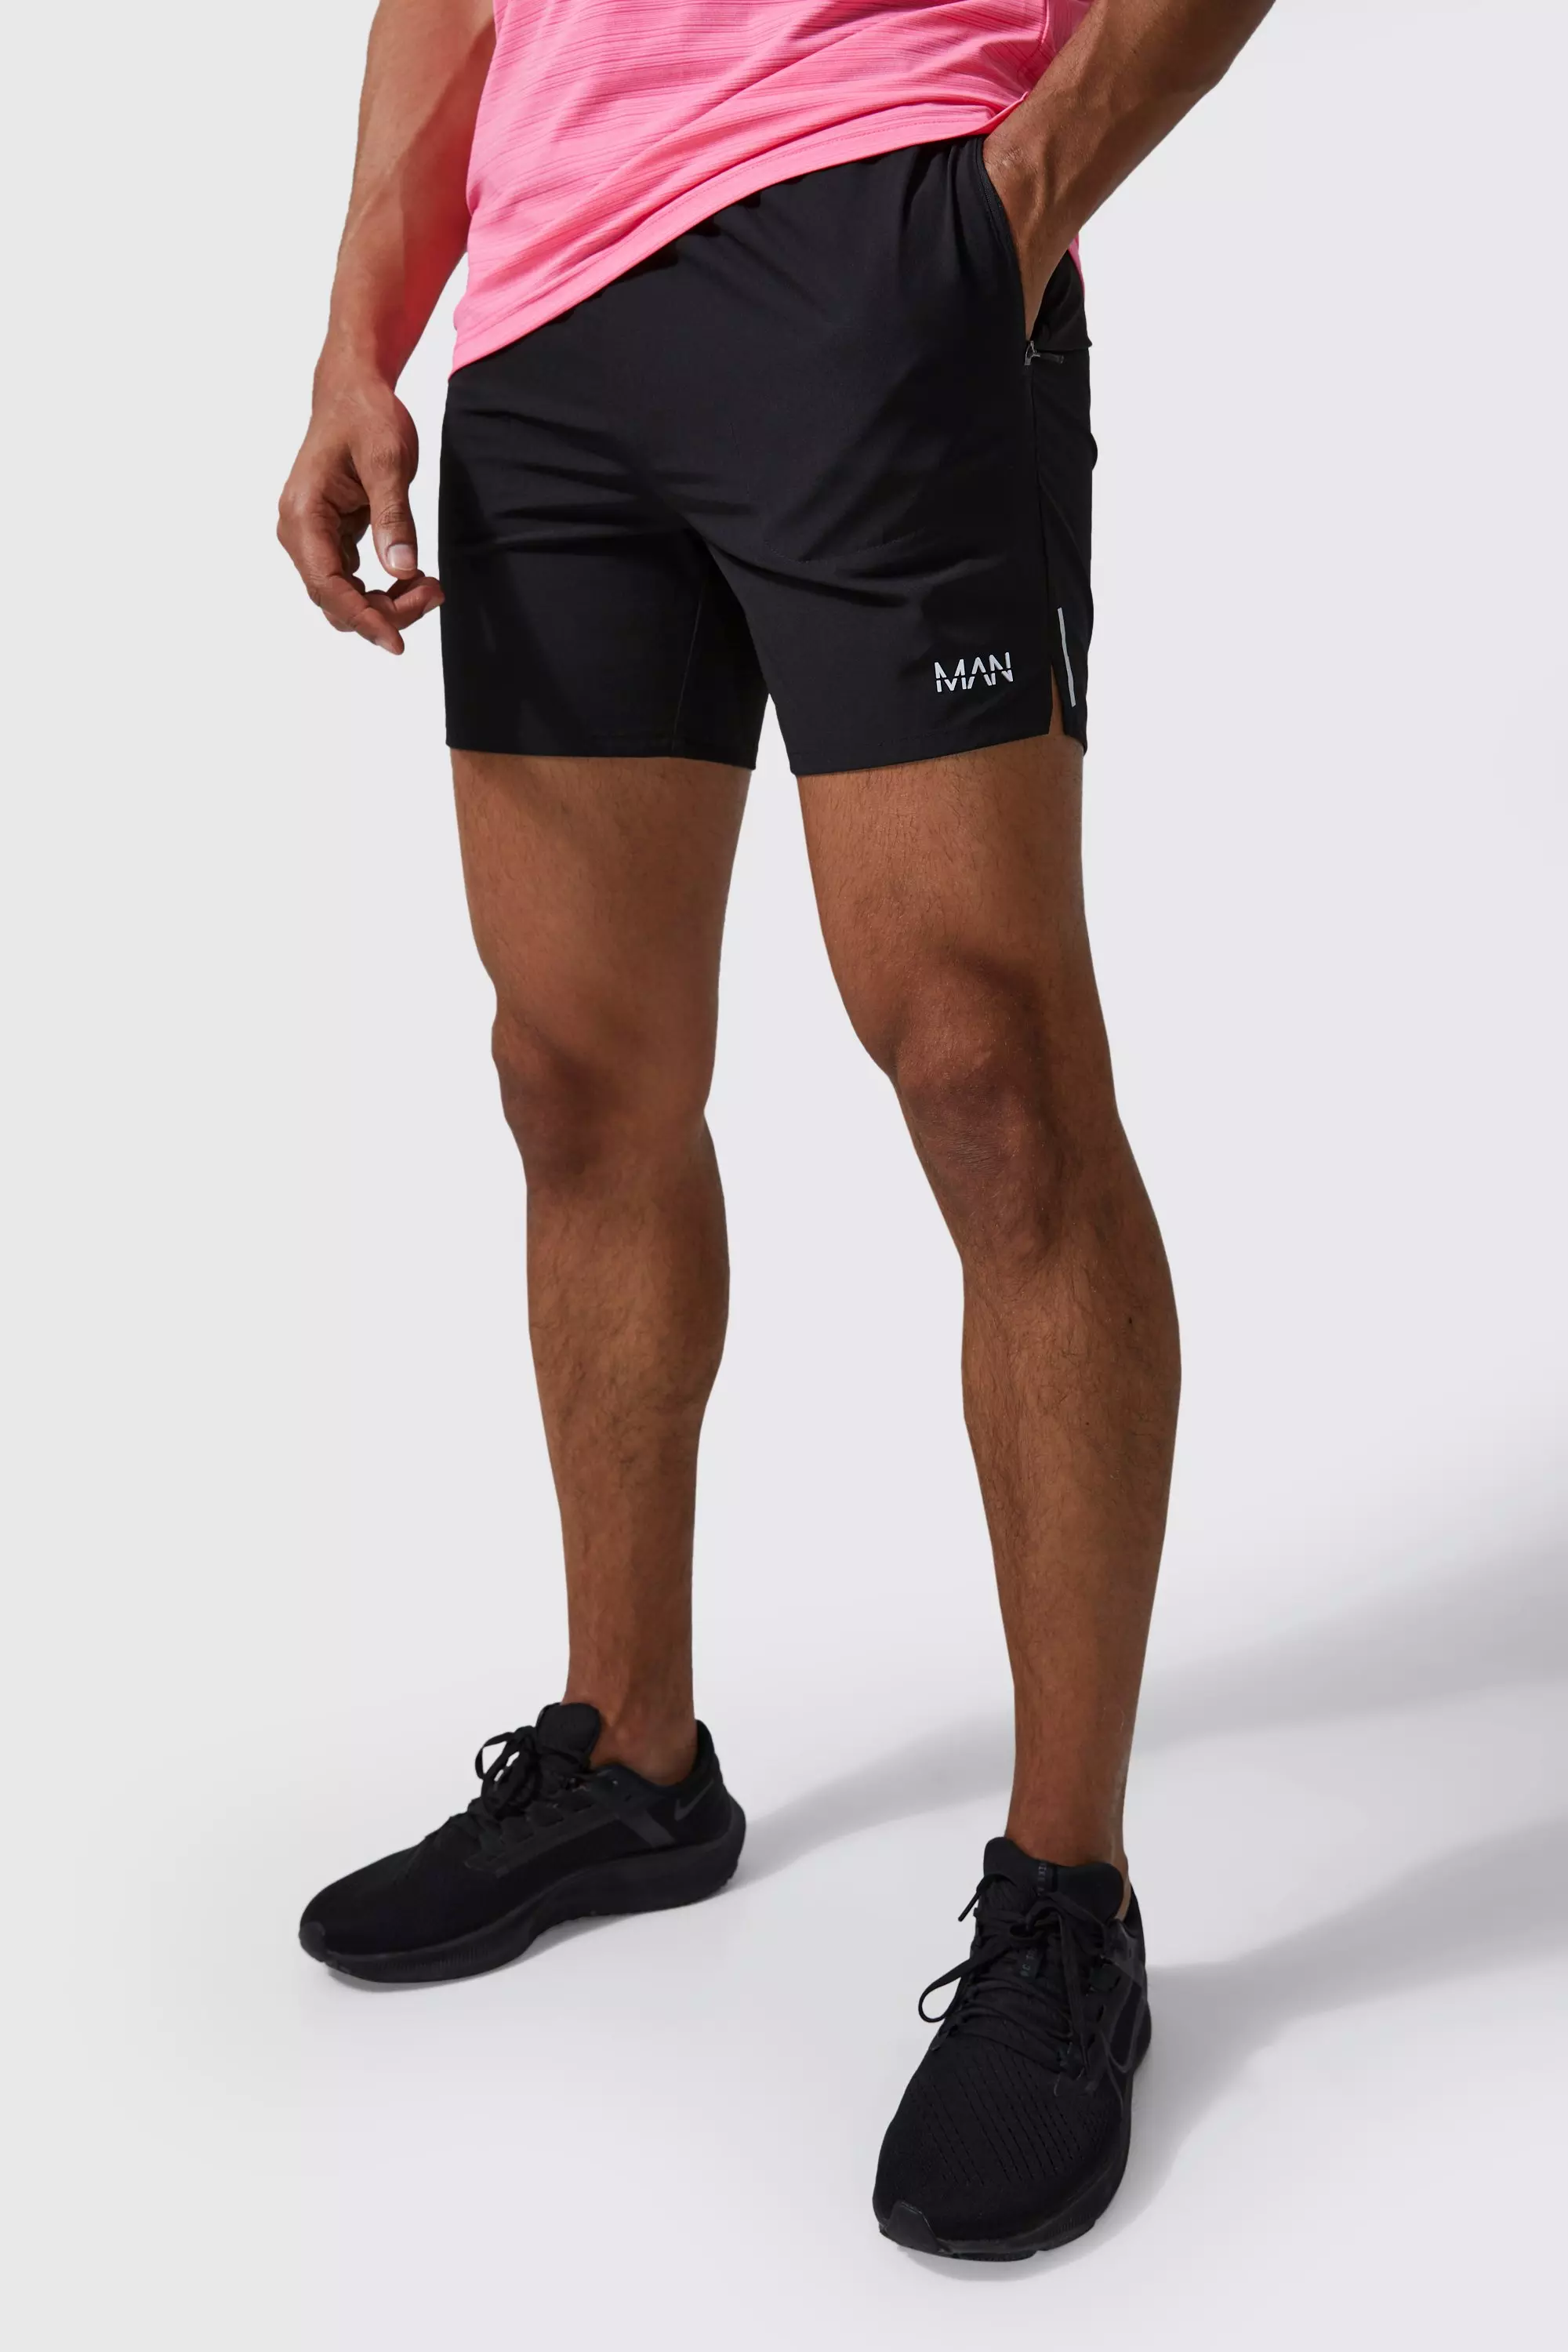 Man Active Lightweight Performance Shorts Black